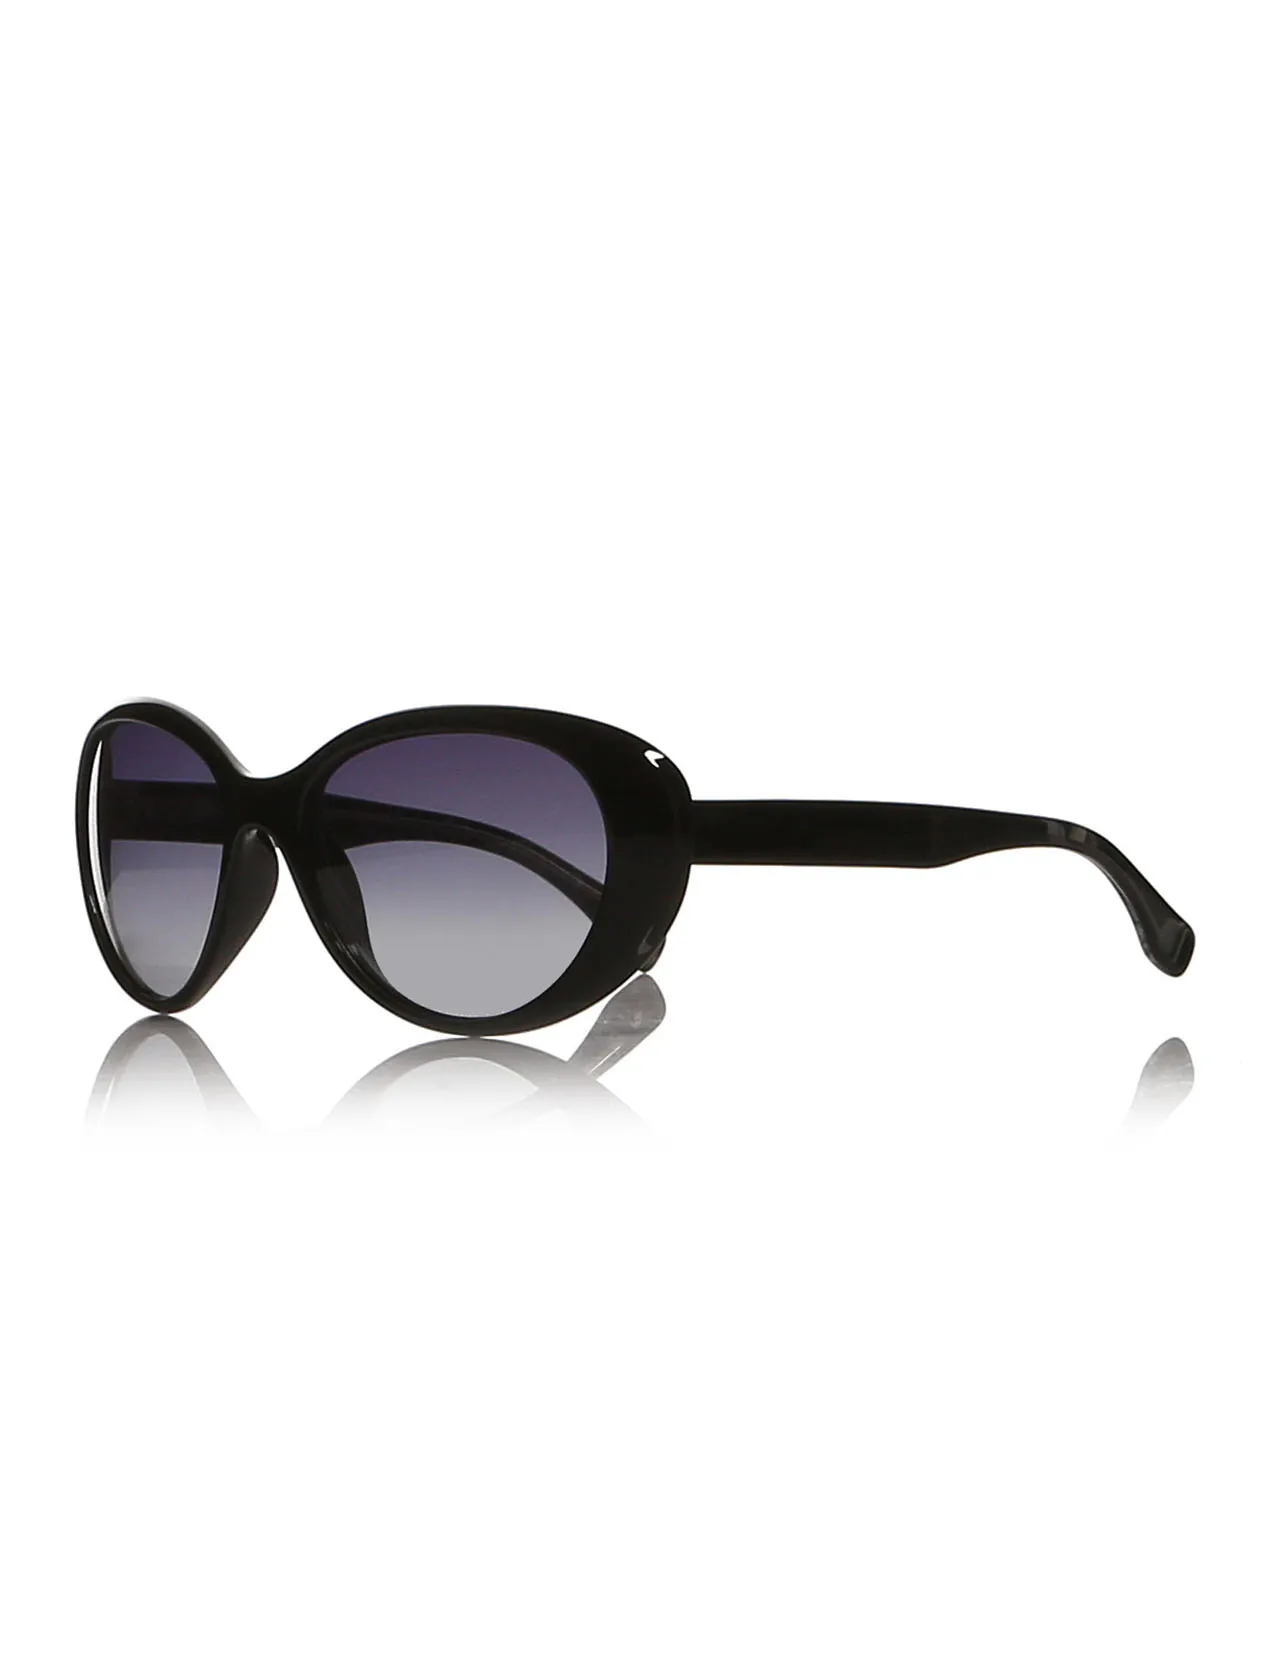 

Women's sunglasses S. C 4087 01 bone black organic rectangle rectangular 57-18-135 suncity